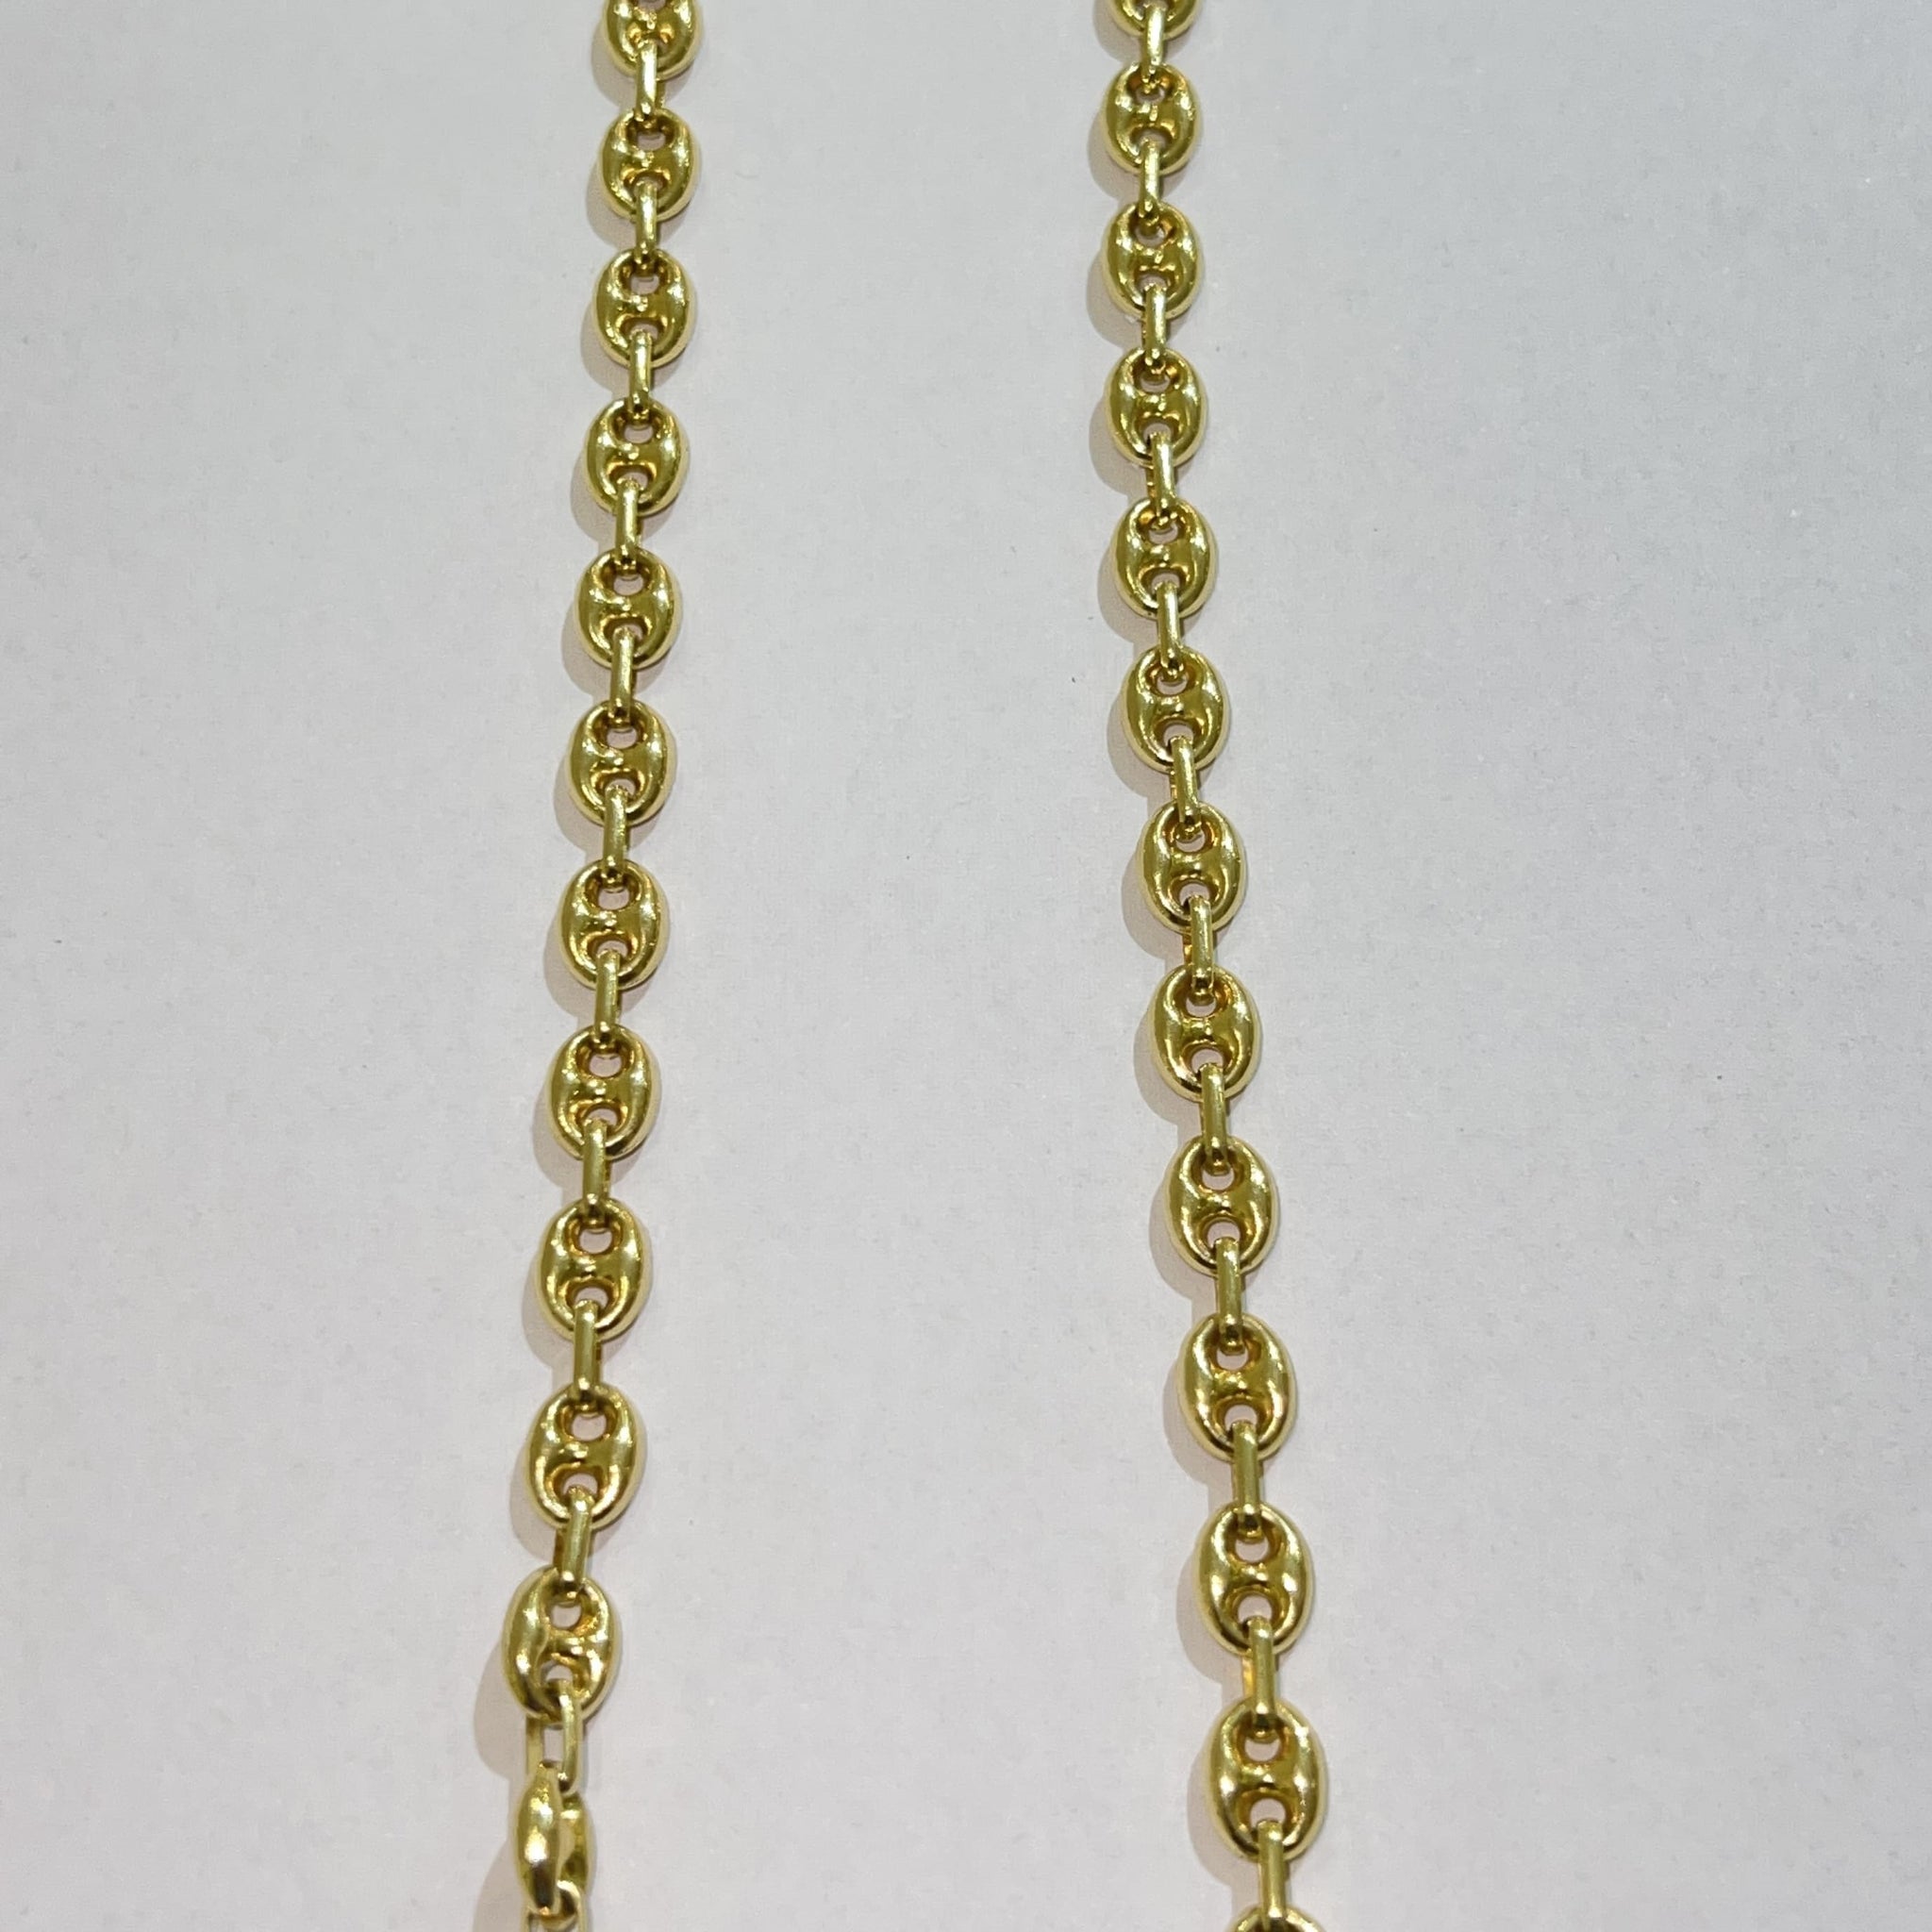 Gucci Link - 14 carat gold - 60cm / 6.2mm